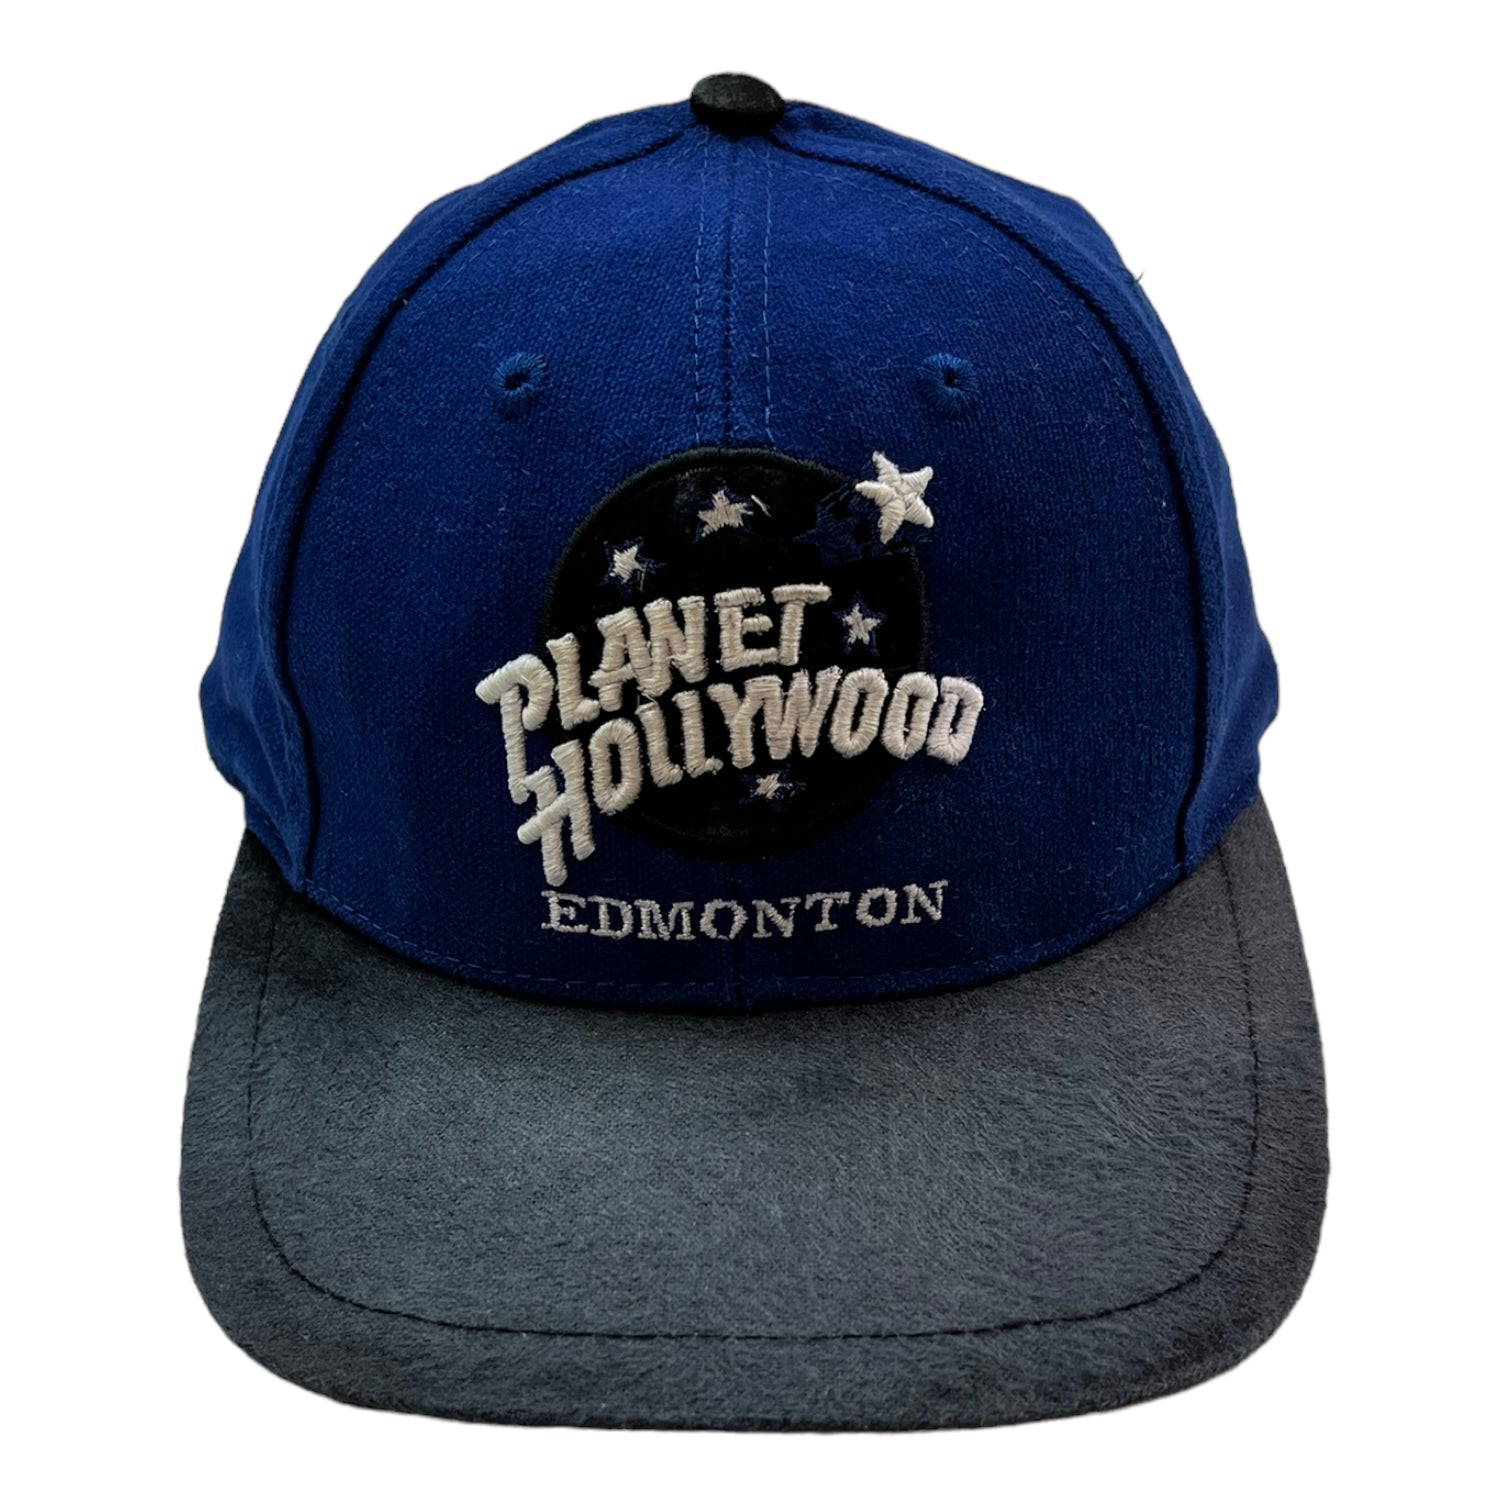 Vintage Planet Hollywood Edmonton Hat